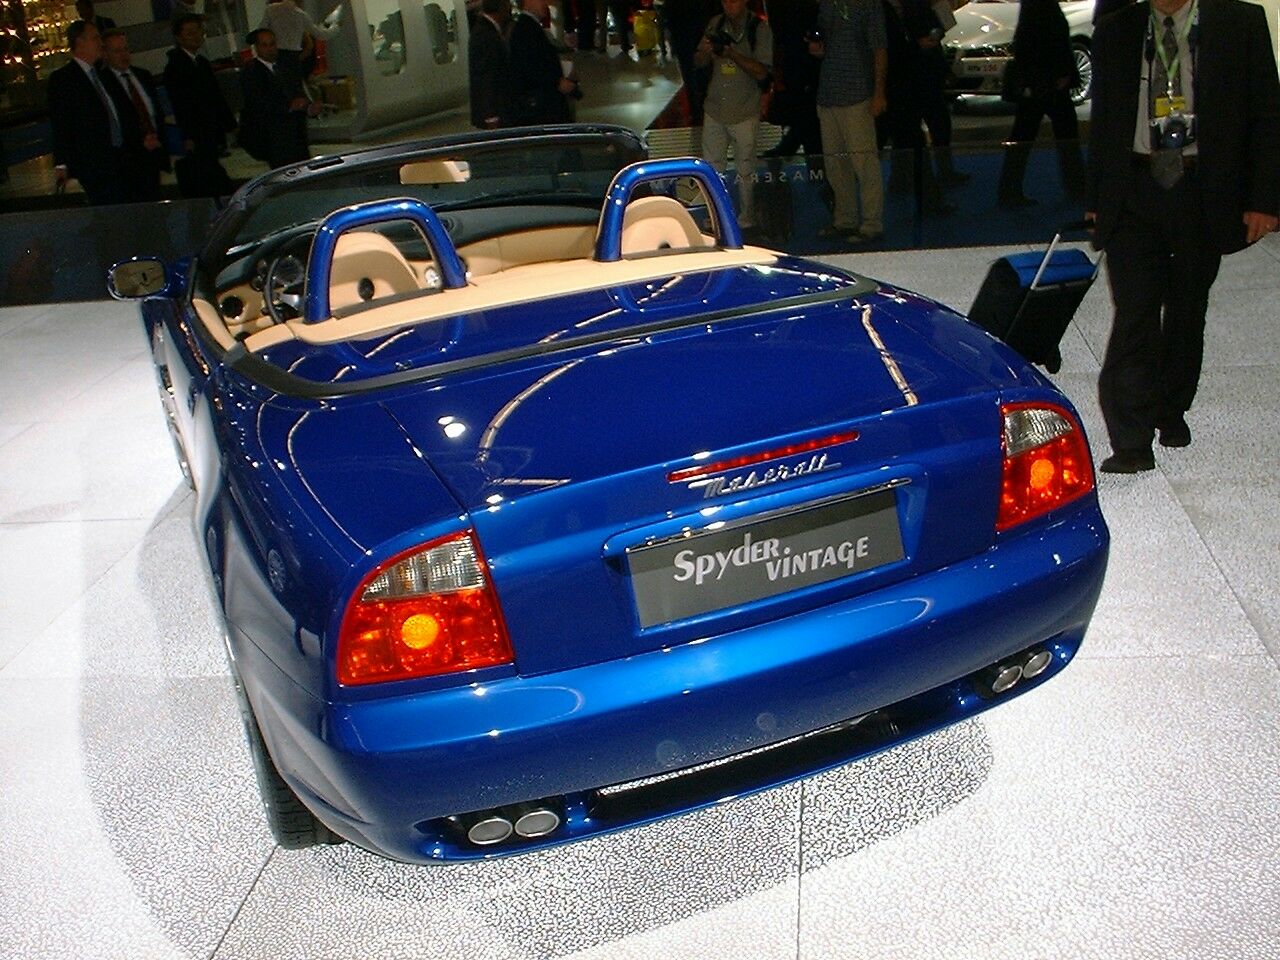 Maserati Spyder Vintage at the 2003 Frankfurt Motor Show